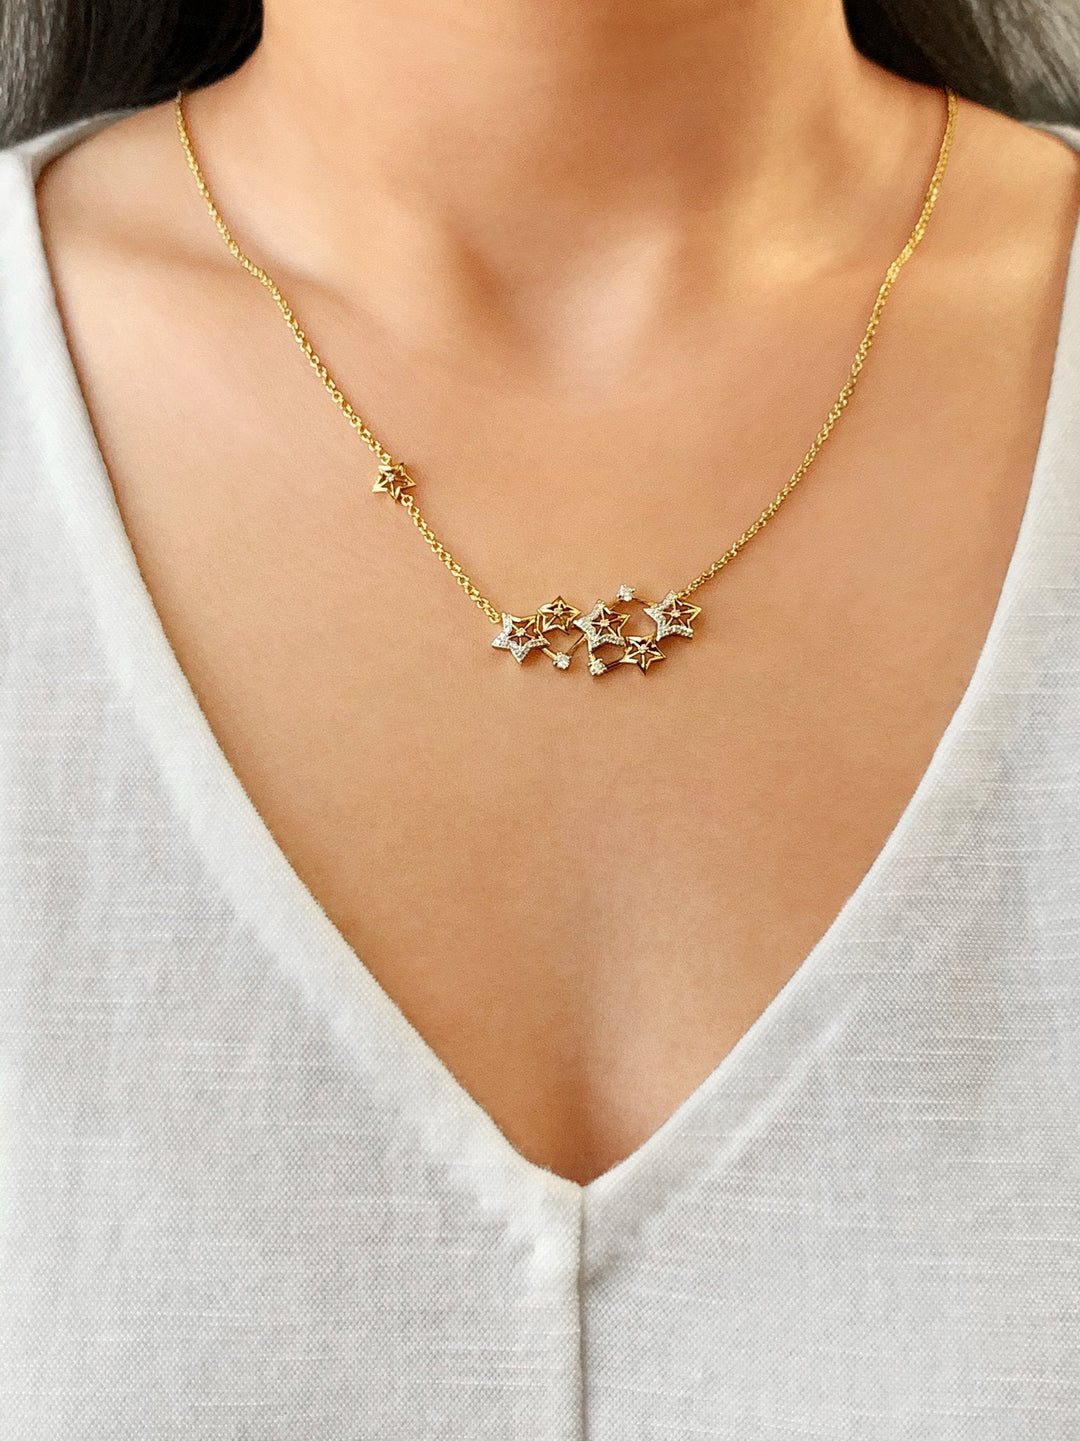 Starburst Constellation Diamond Necklace in 14K Yellow Gold